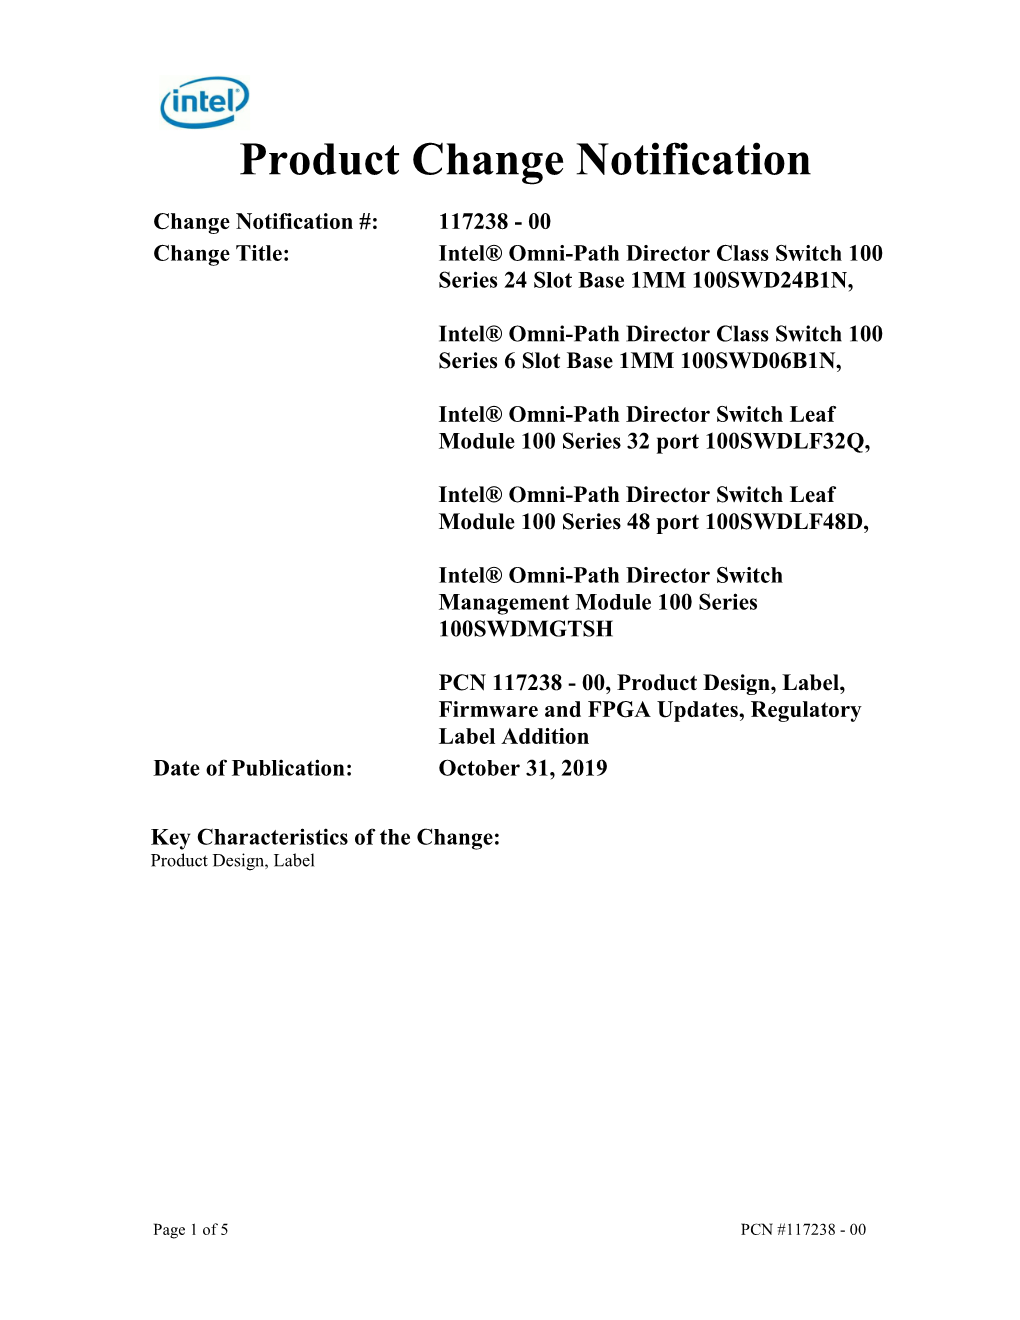 Product Change Notification 117238 - 00